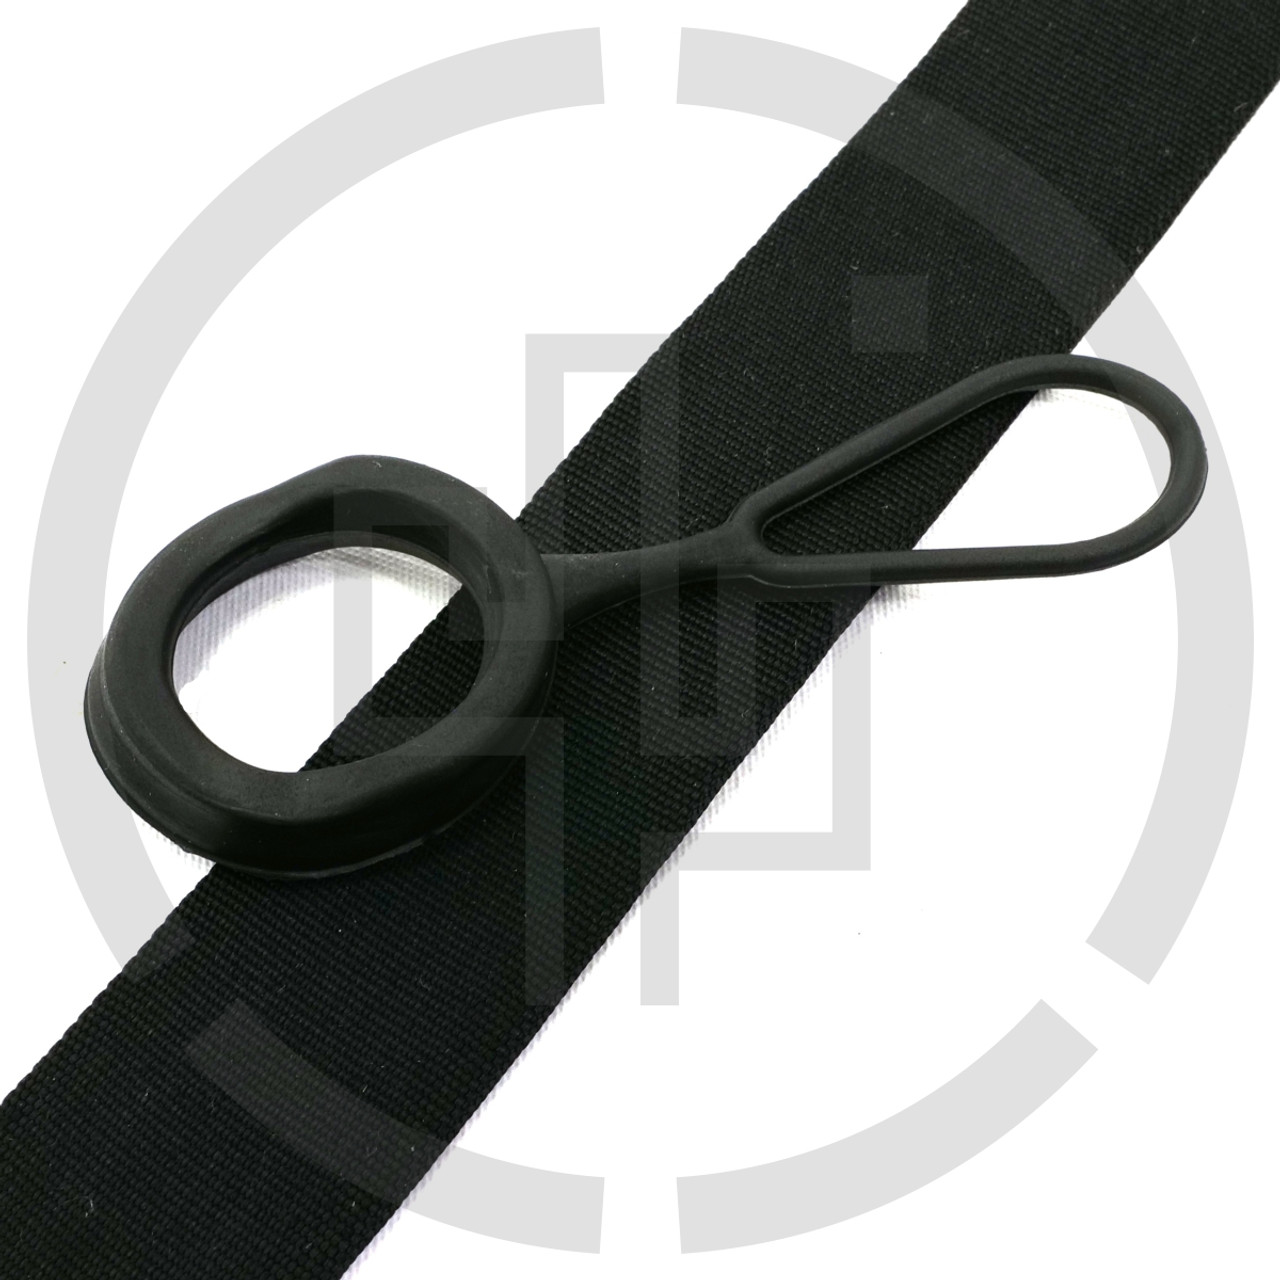 Chodofo 10Pcs U-Shape Nylon Zipper Pulls Heavy Duty Zipper Tags